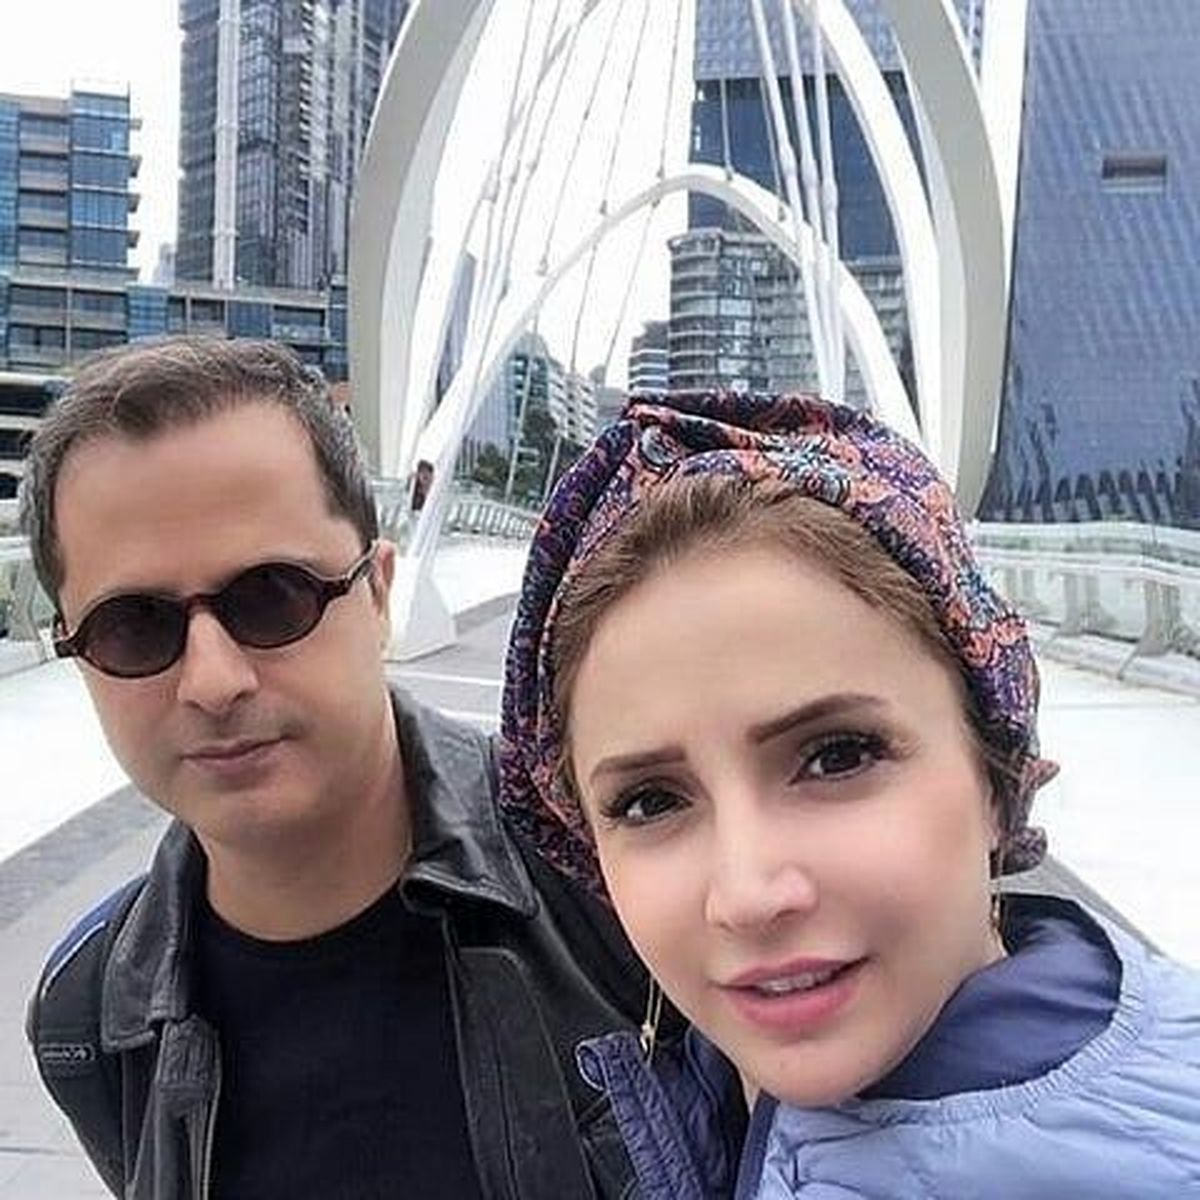 شبنم قلی خانی در کنار همسرش + عکس